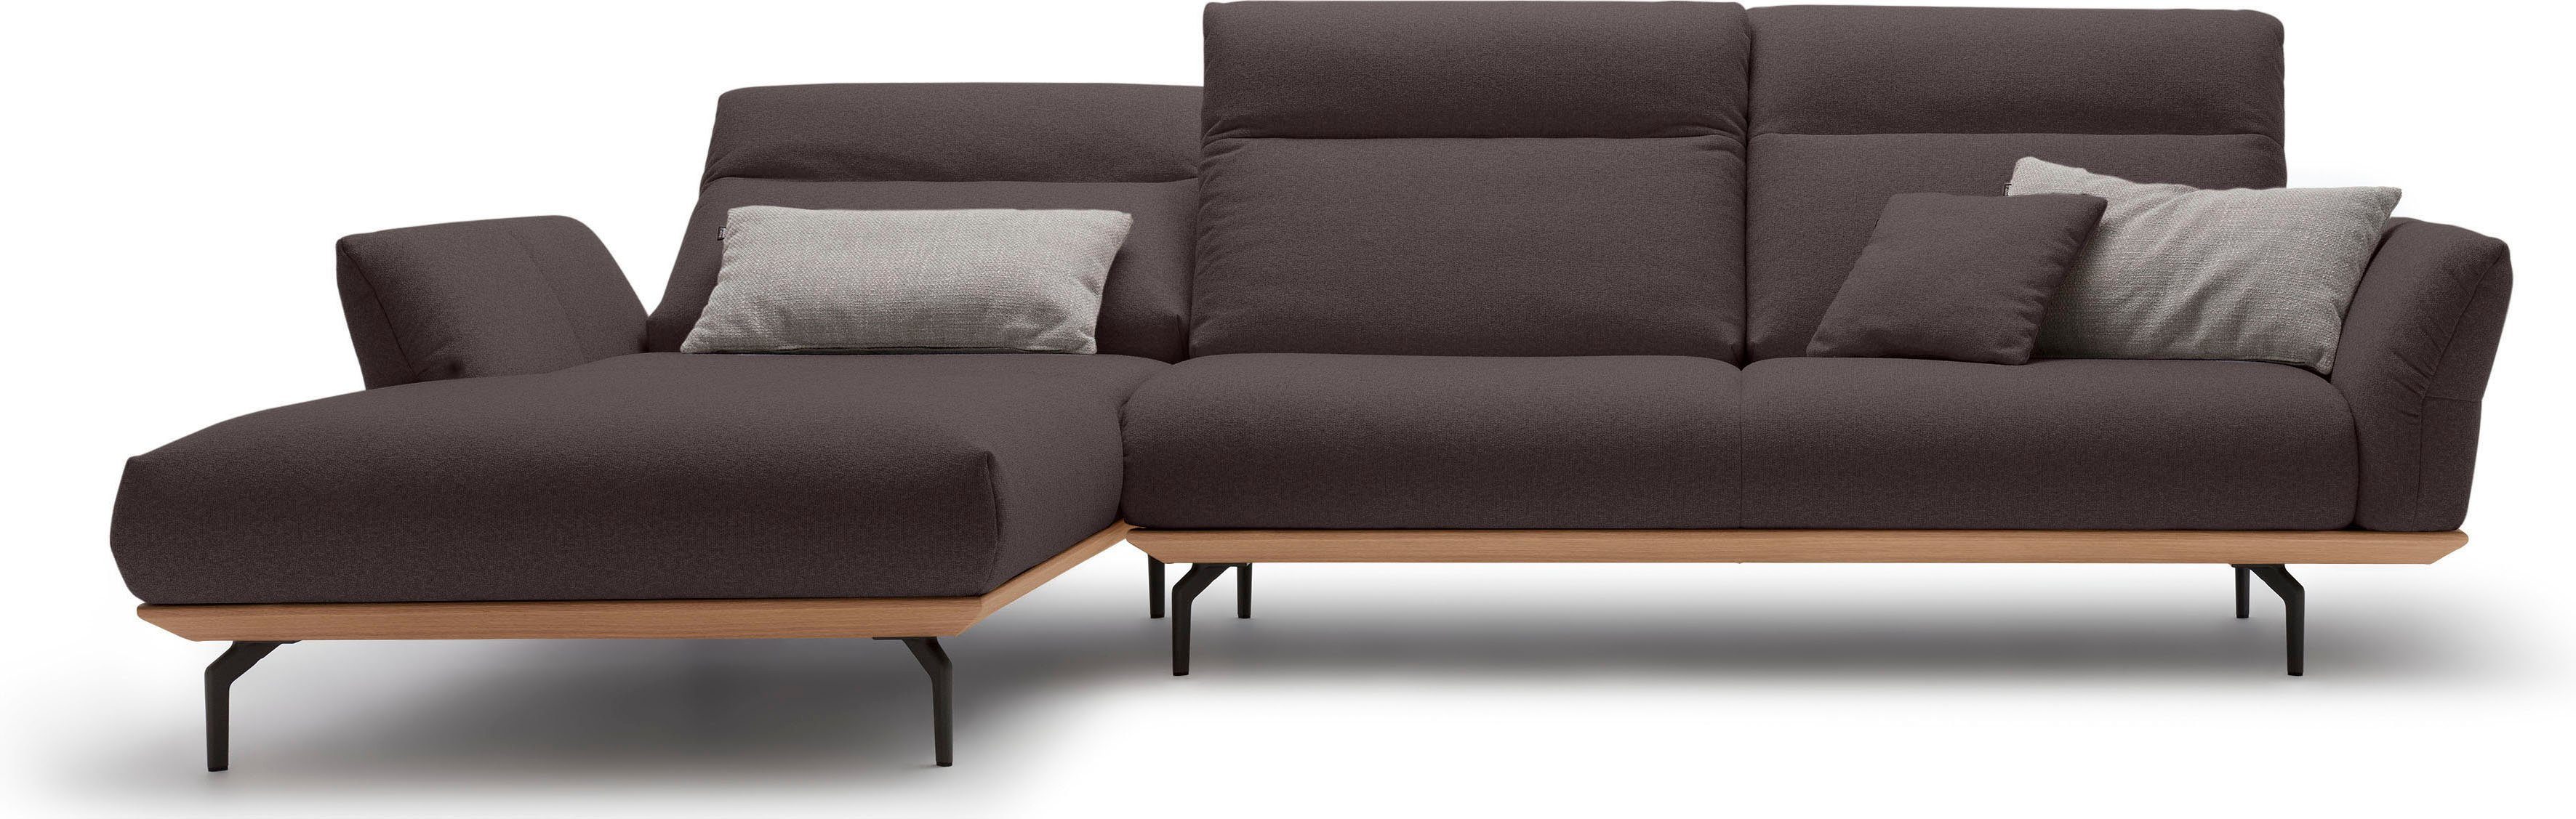 sofa Eiche, hs.460, hülsta Winkelfüße in 318 cm in Breite Umbragrau, Ecksofa Sockel